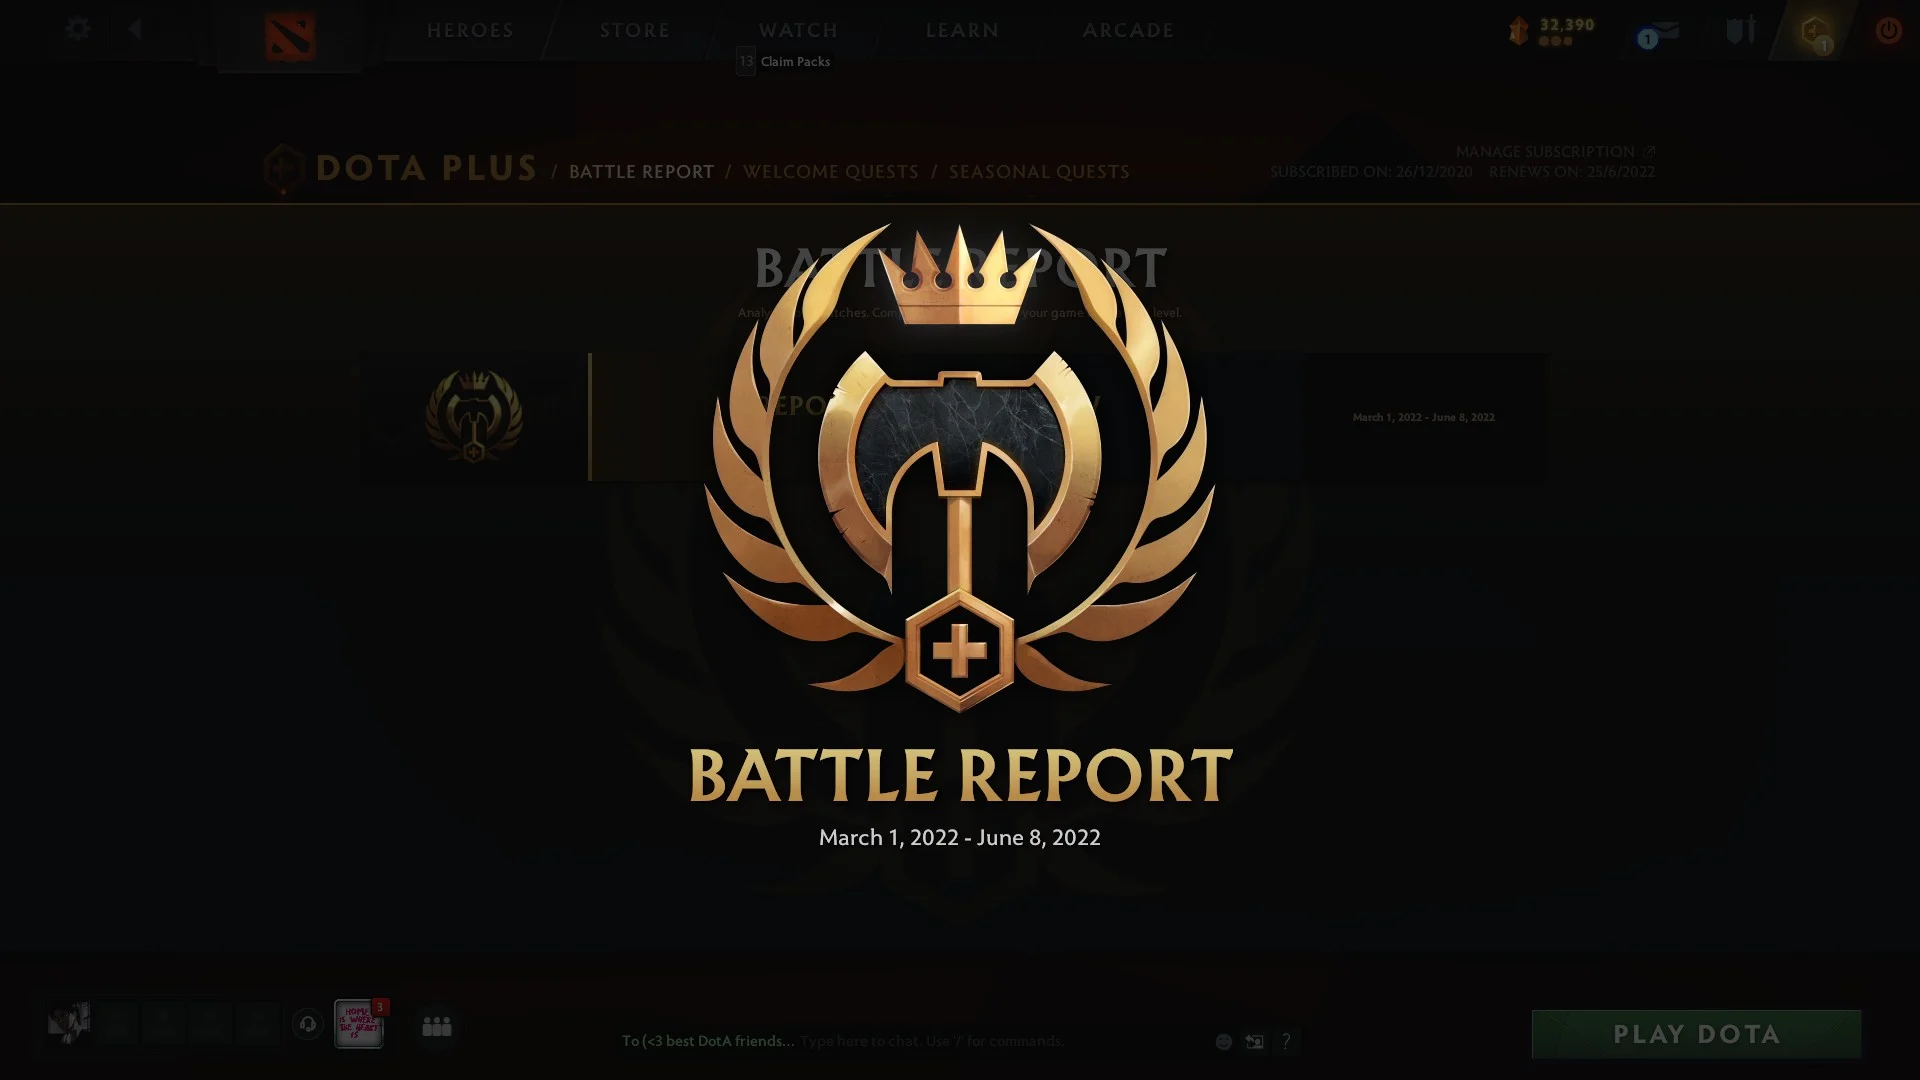 Battle Reports